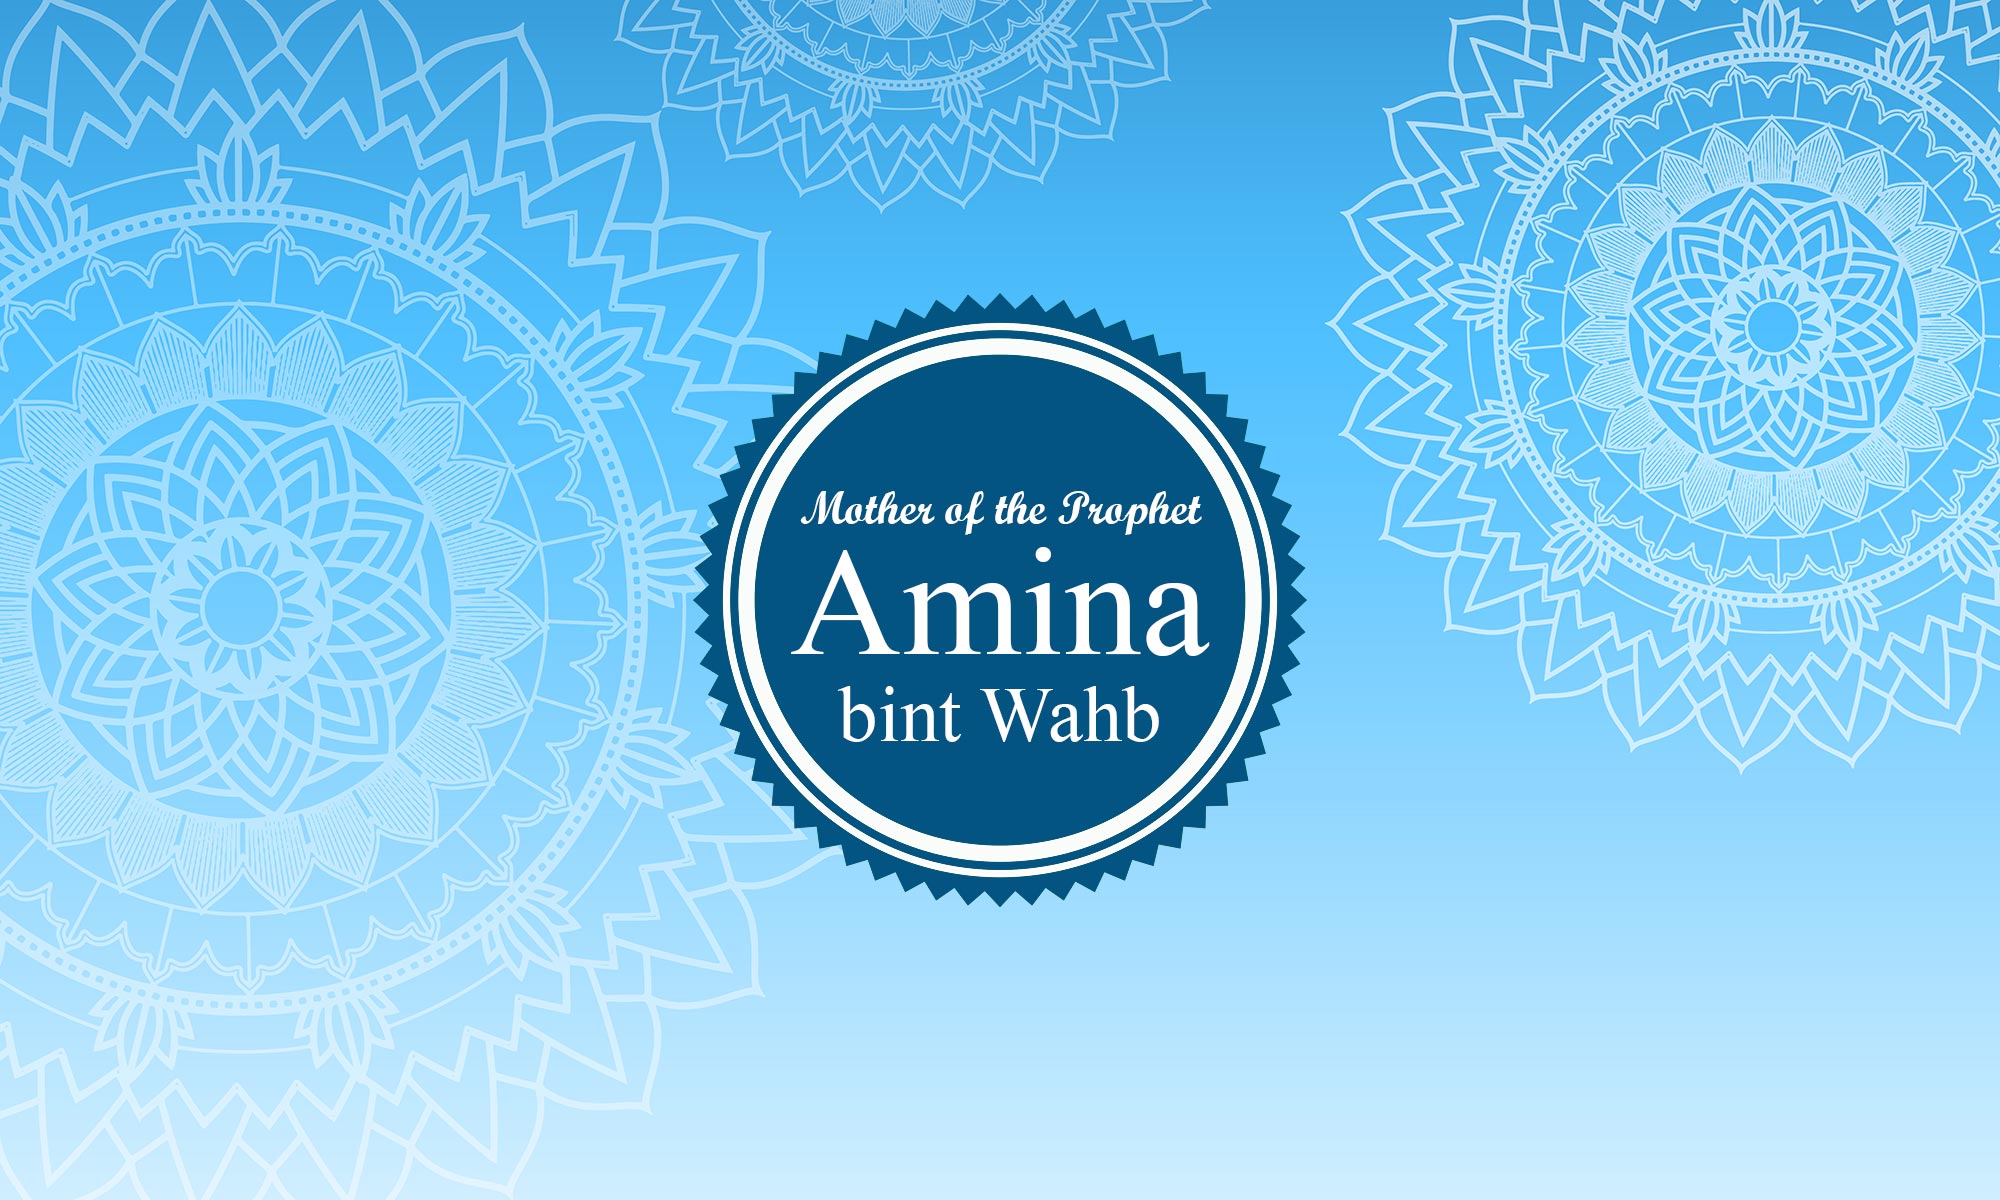 Aminah bint Wahb: Life, Attributes, Pregnancy & Death